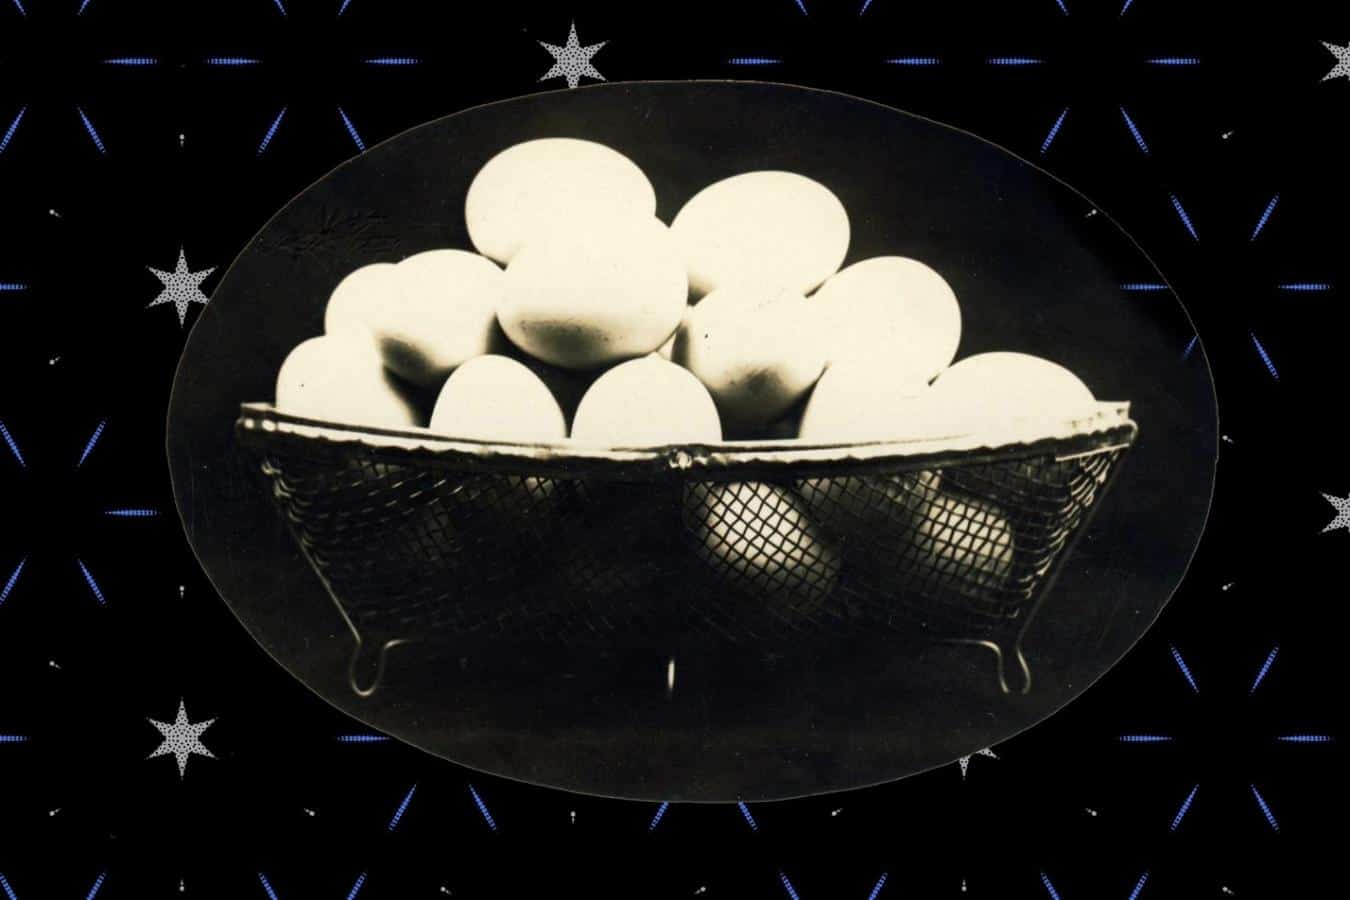 Eggs in a Basket.